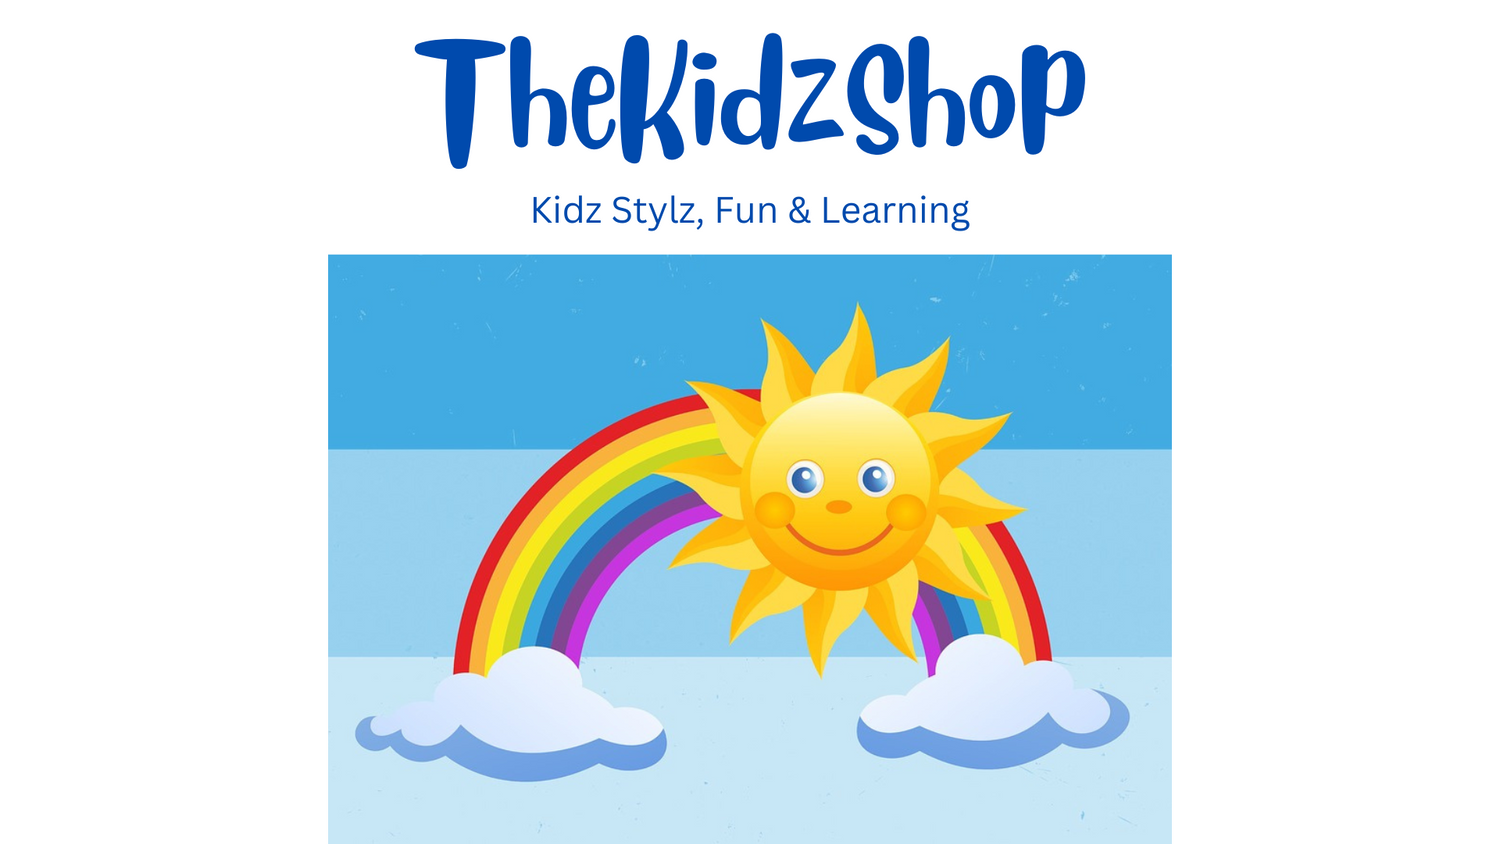 TheKidzShop, Kidz Stylz, Fun & Learning